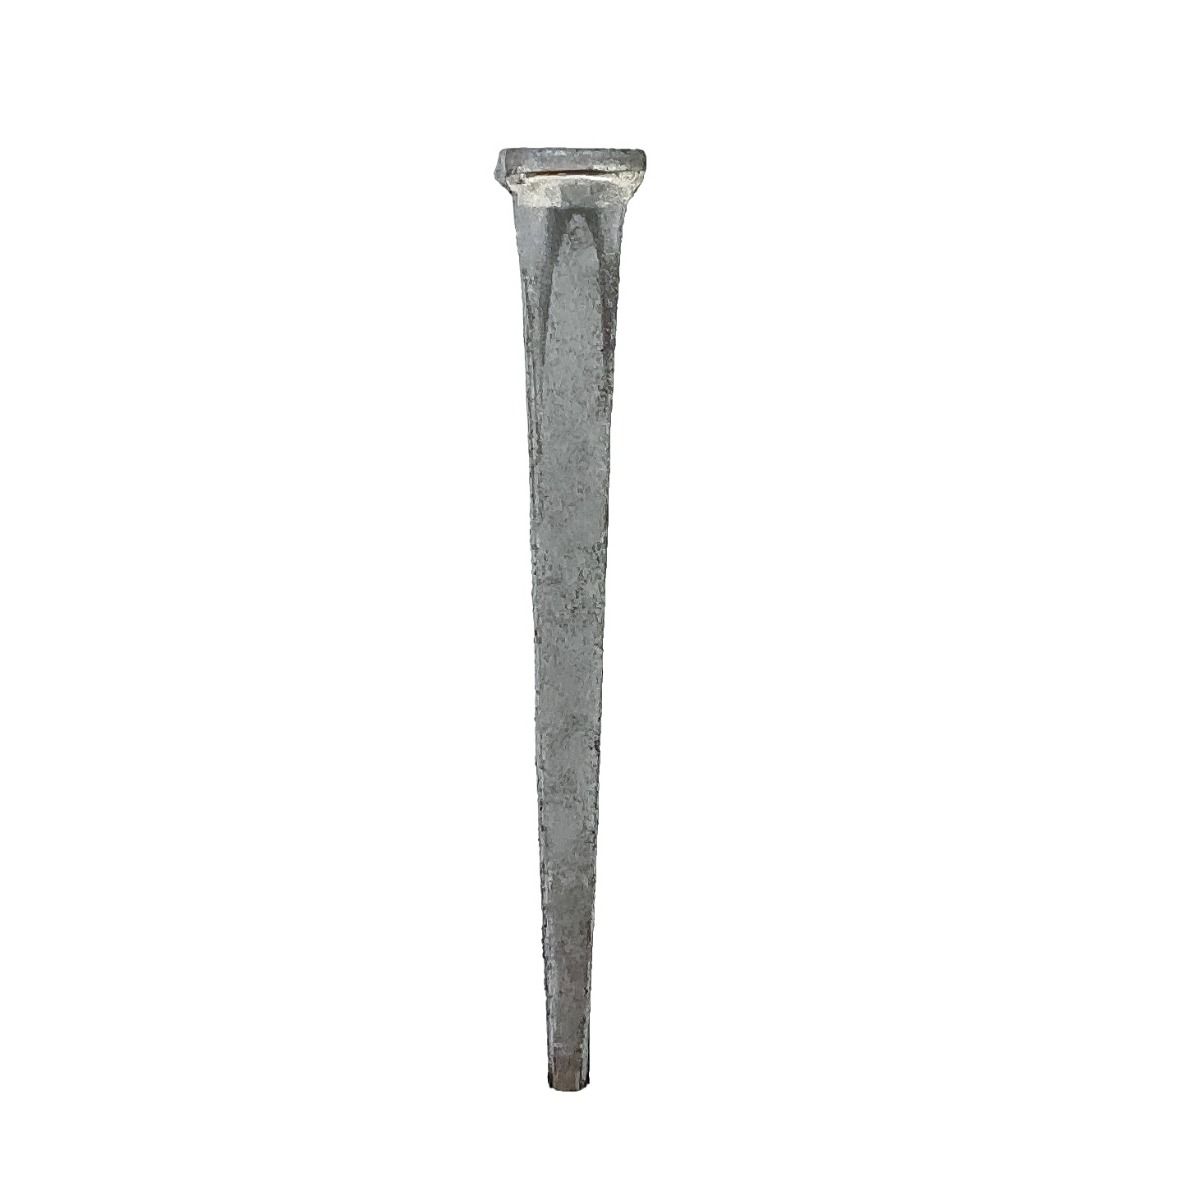 DOTOOL Finish Nailer 16GA 1-inch to 2-1/2-inch Finish Nails Pneumatic Nail  Gun with Tool-Free Depth Adjust - Amazon.com